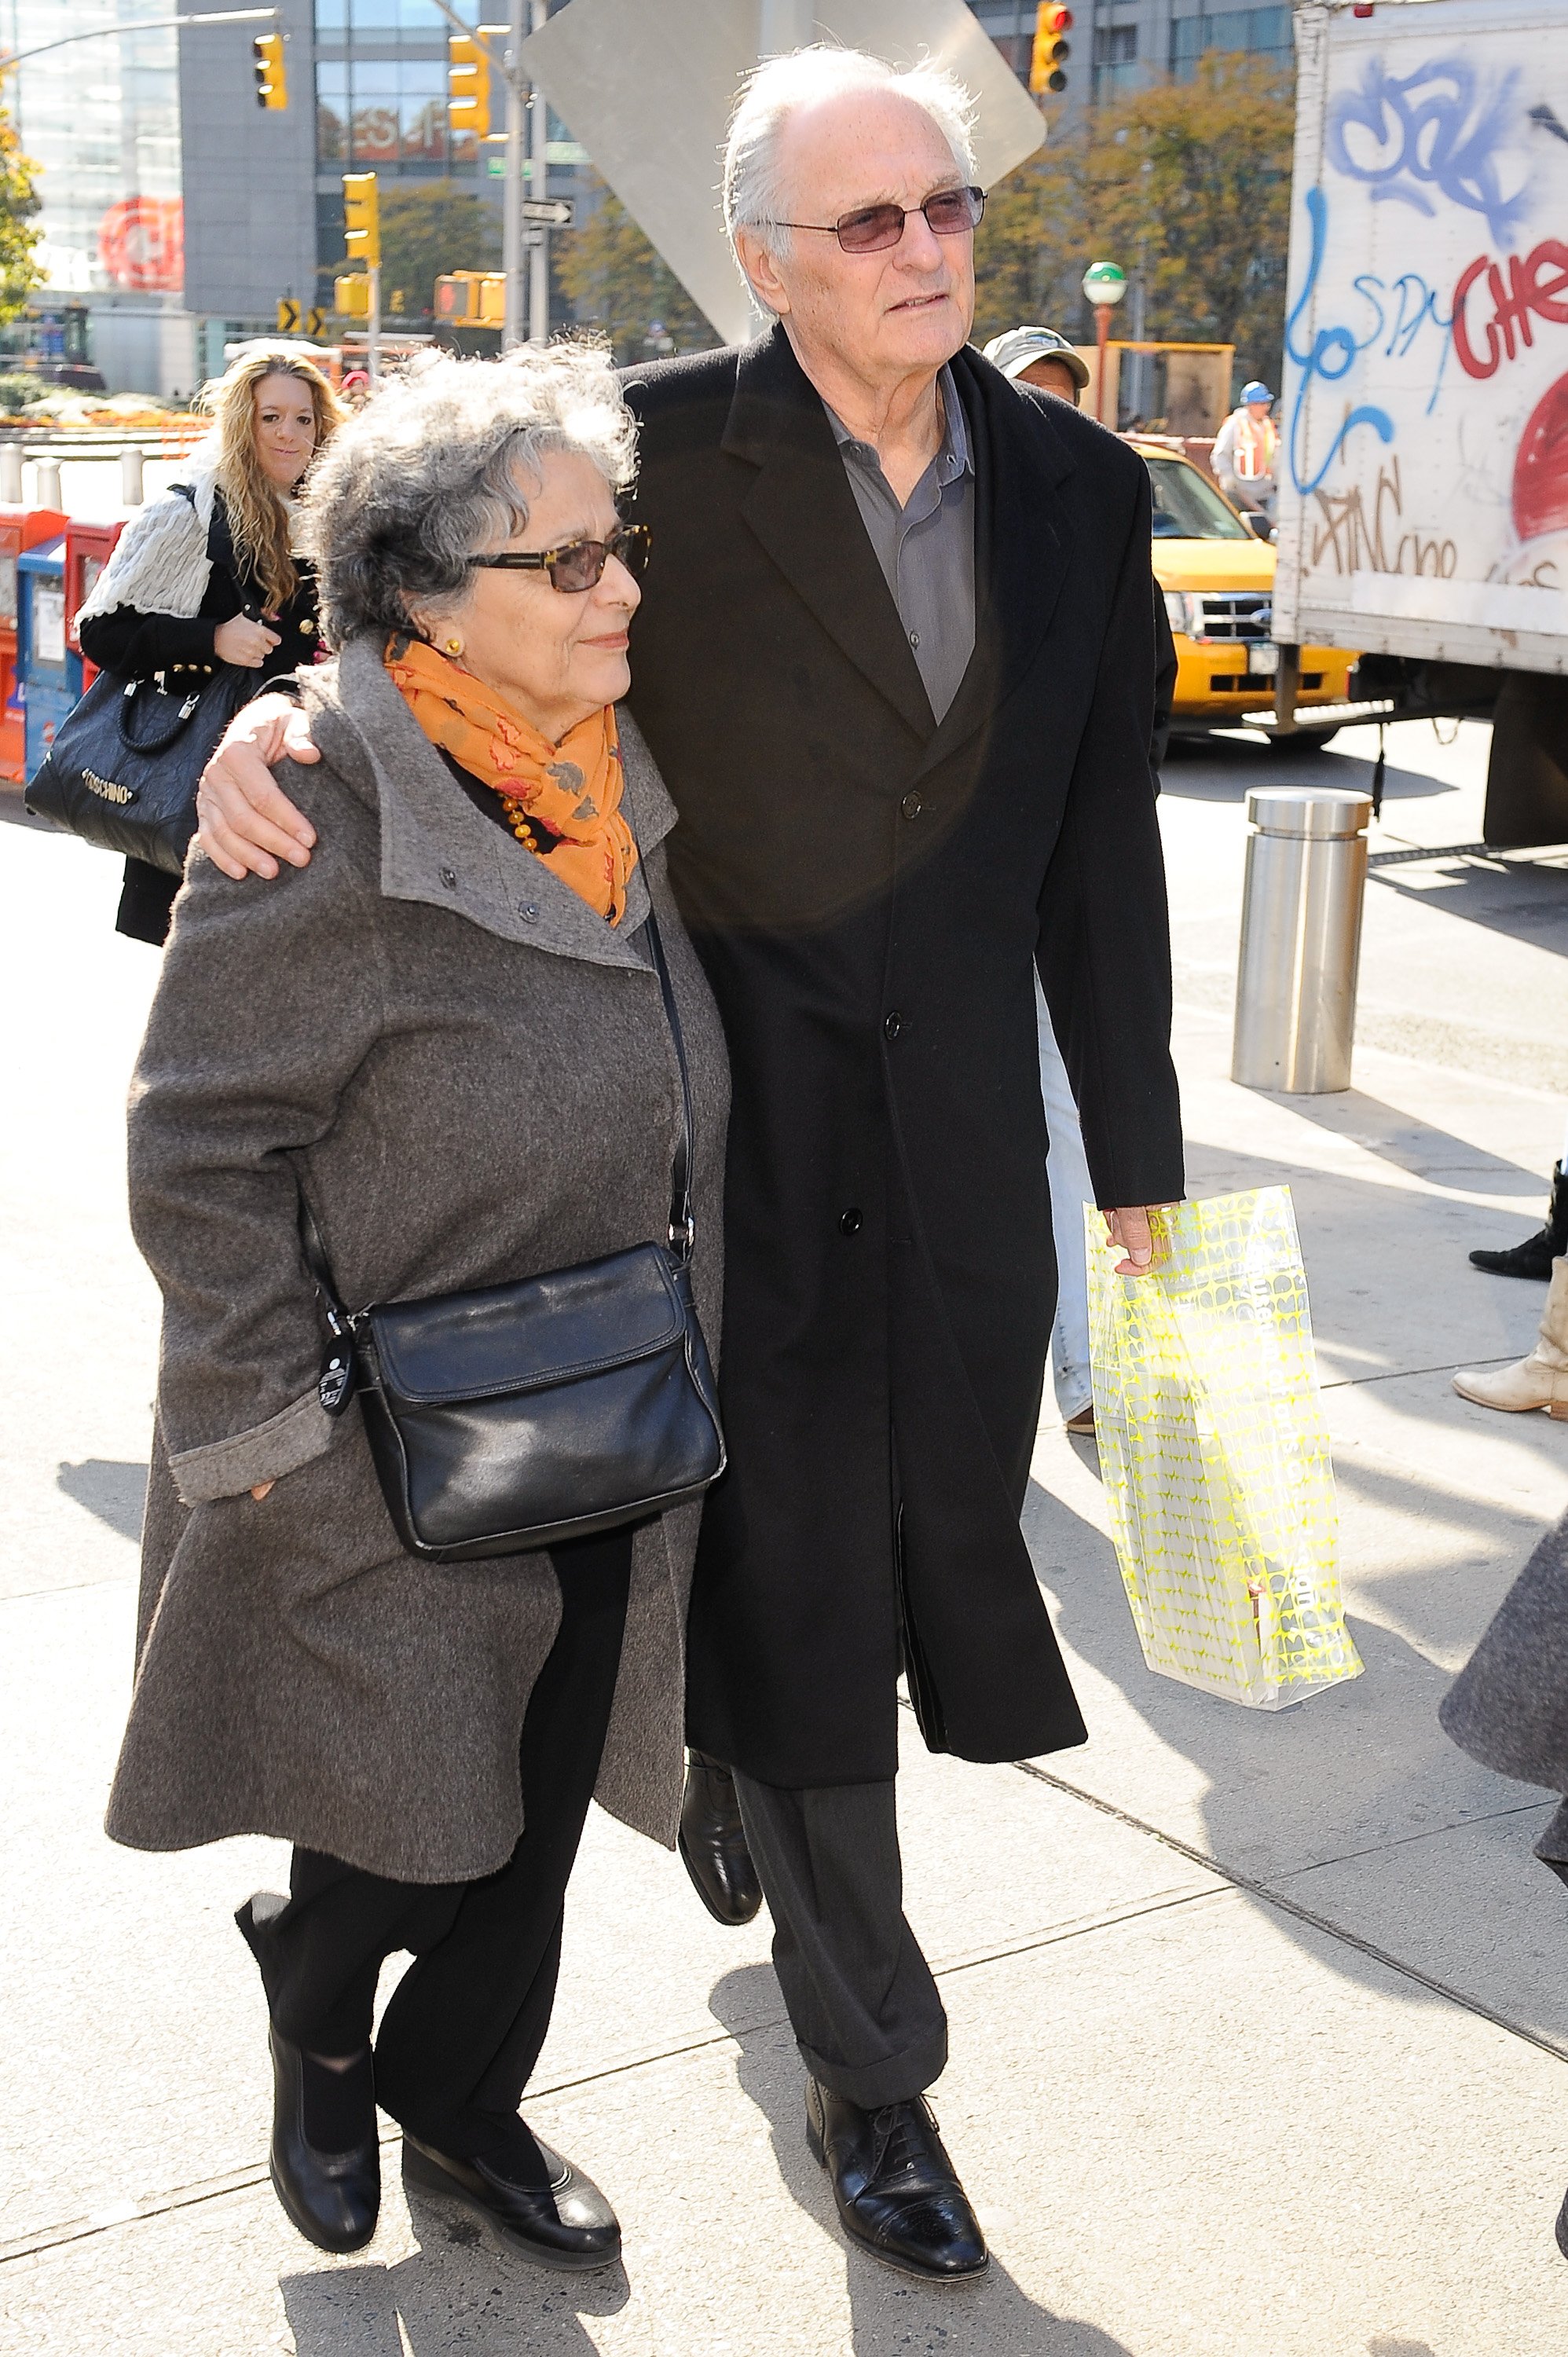 Alan Alda and Arlene Alda walk in Midtown Manhattan on November 3, 2010 in New York City ┃Source: Getty Images